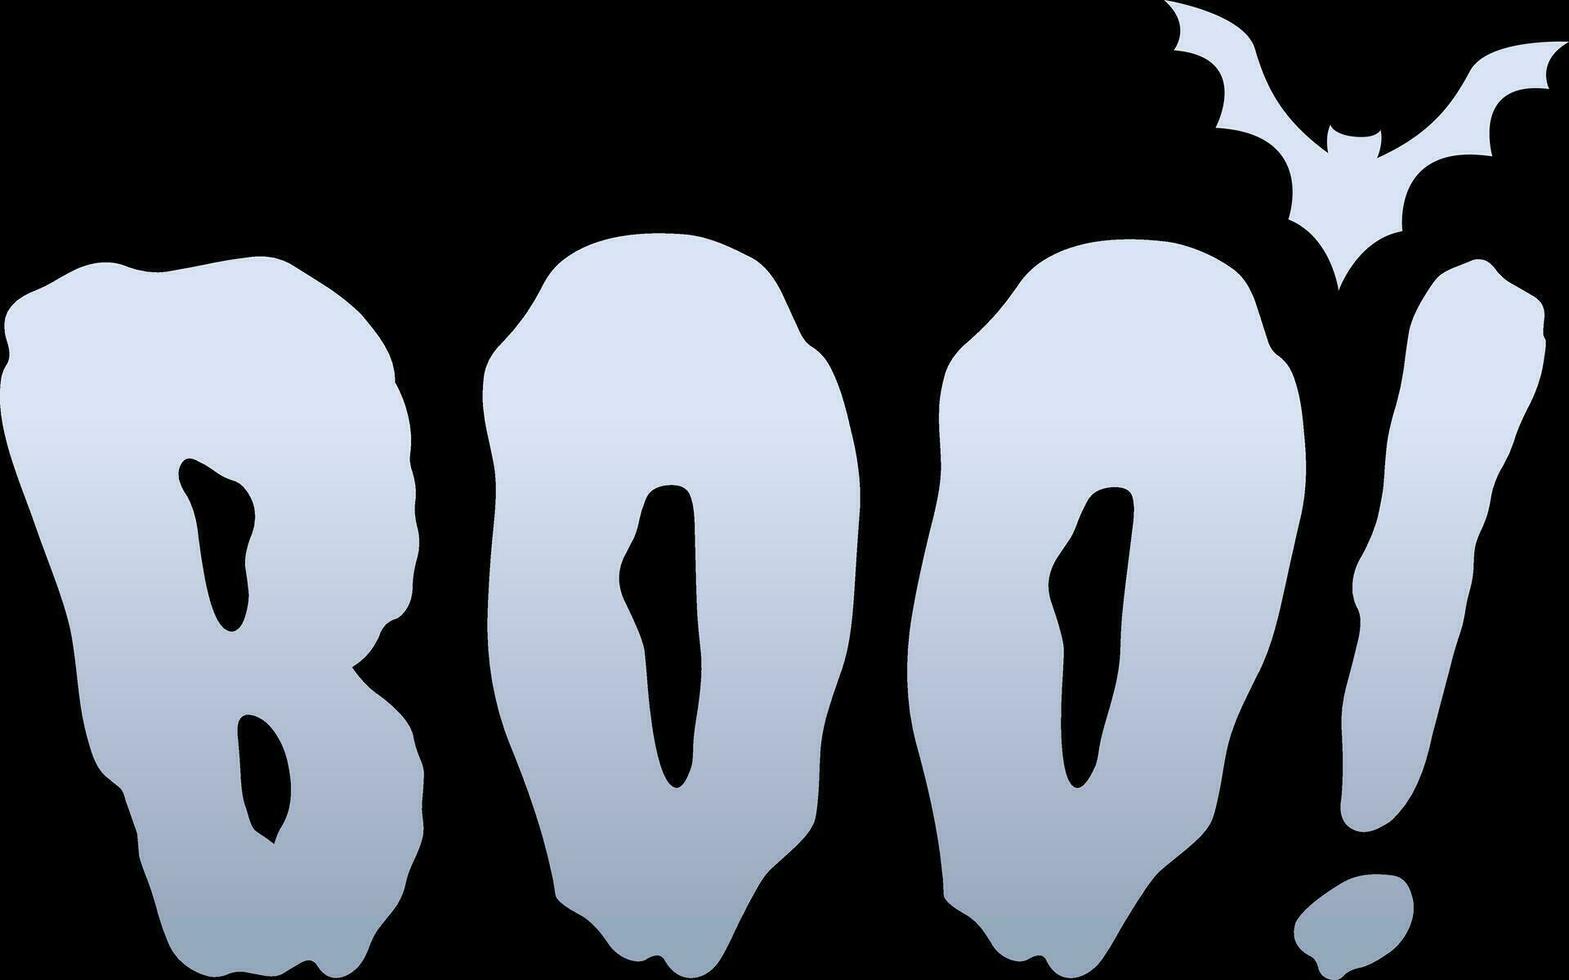 Halloween-Boo-Illustration vektor